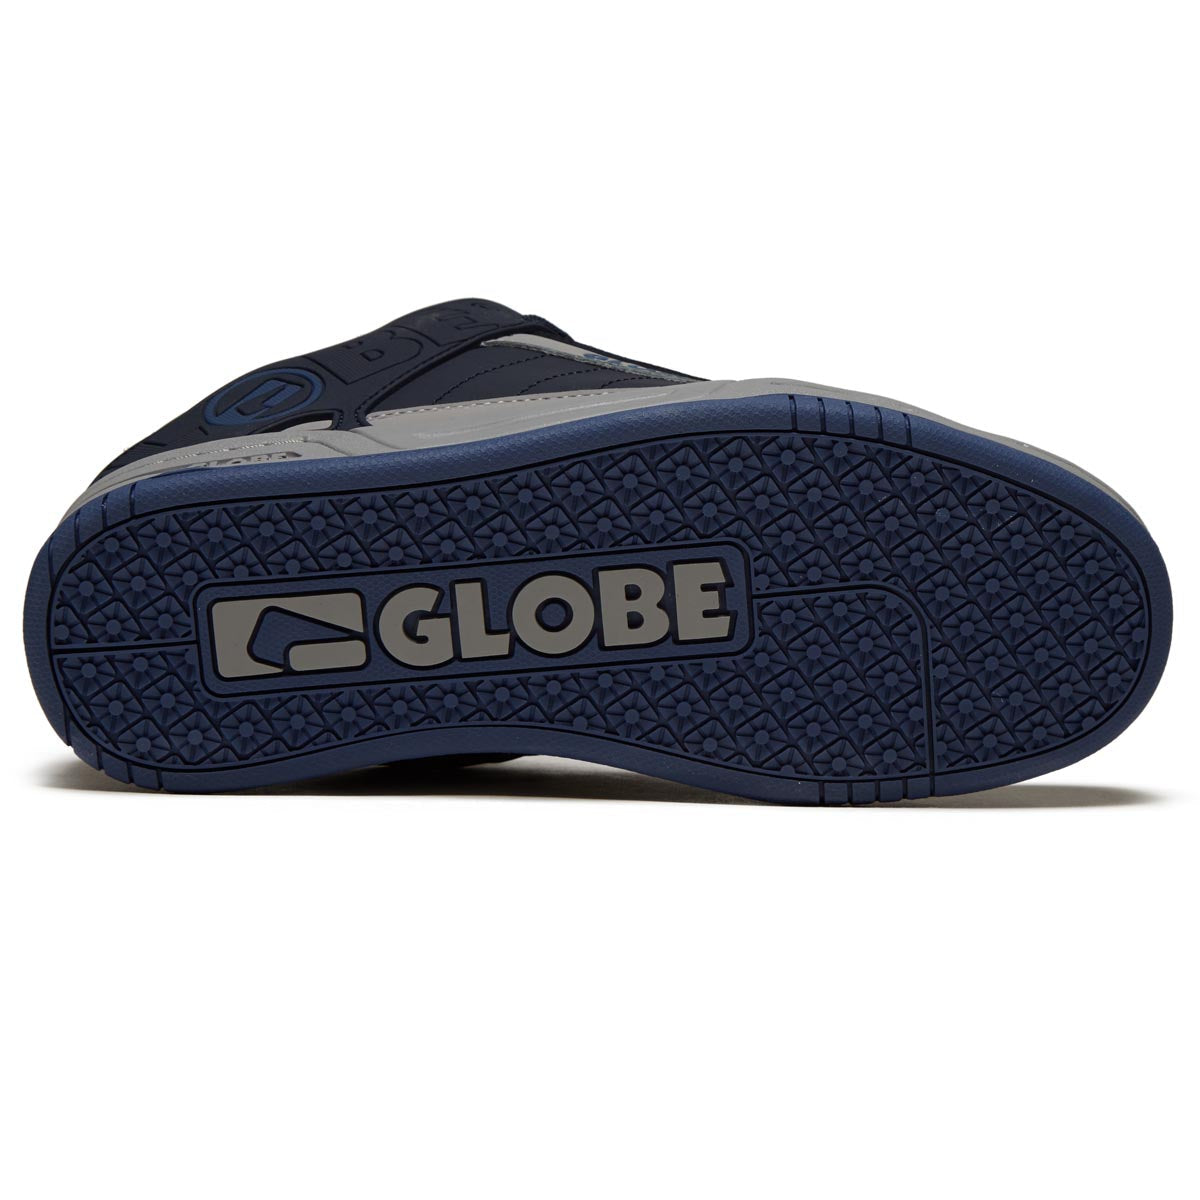 Globe Tilt Shoes - Navy/Denim image 4